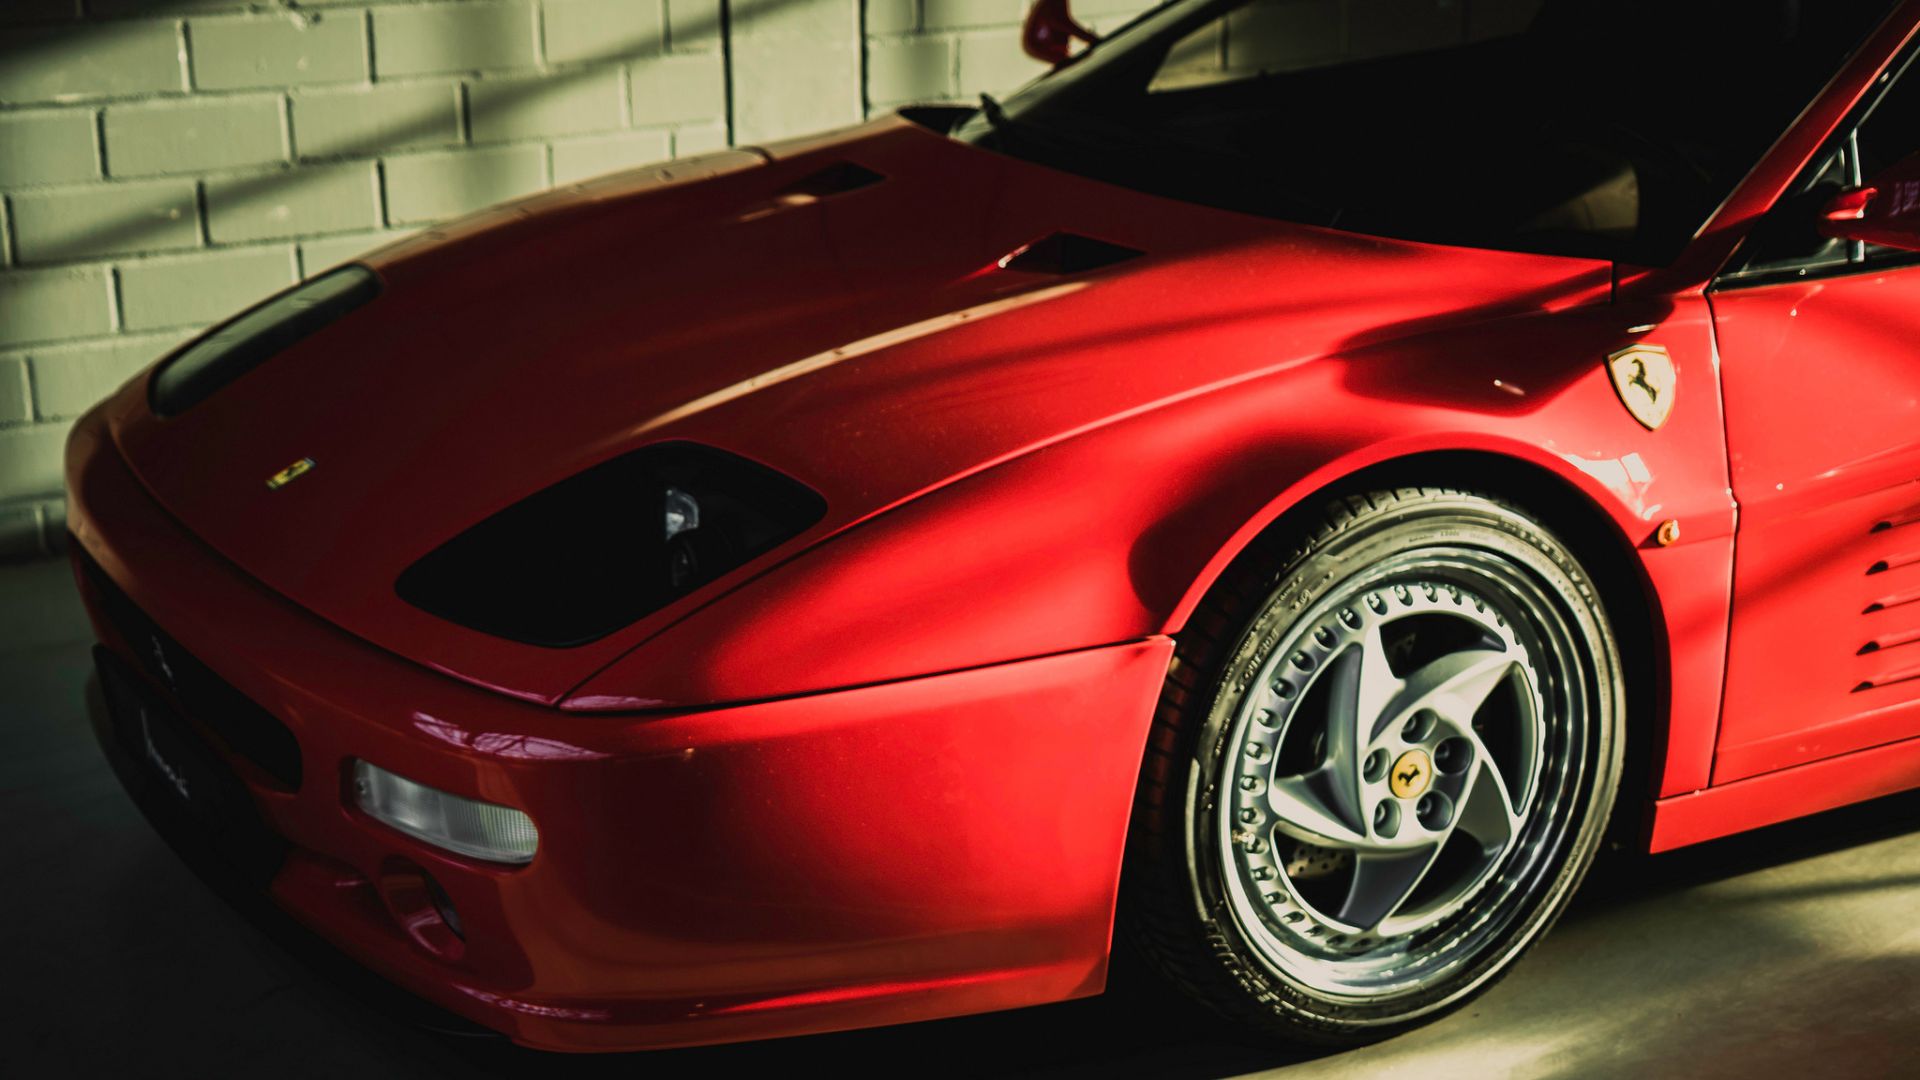 Wallpaper Ferrari F512 M Red Car side view 